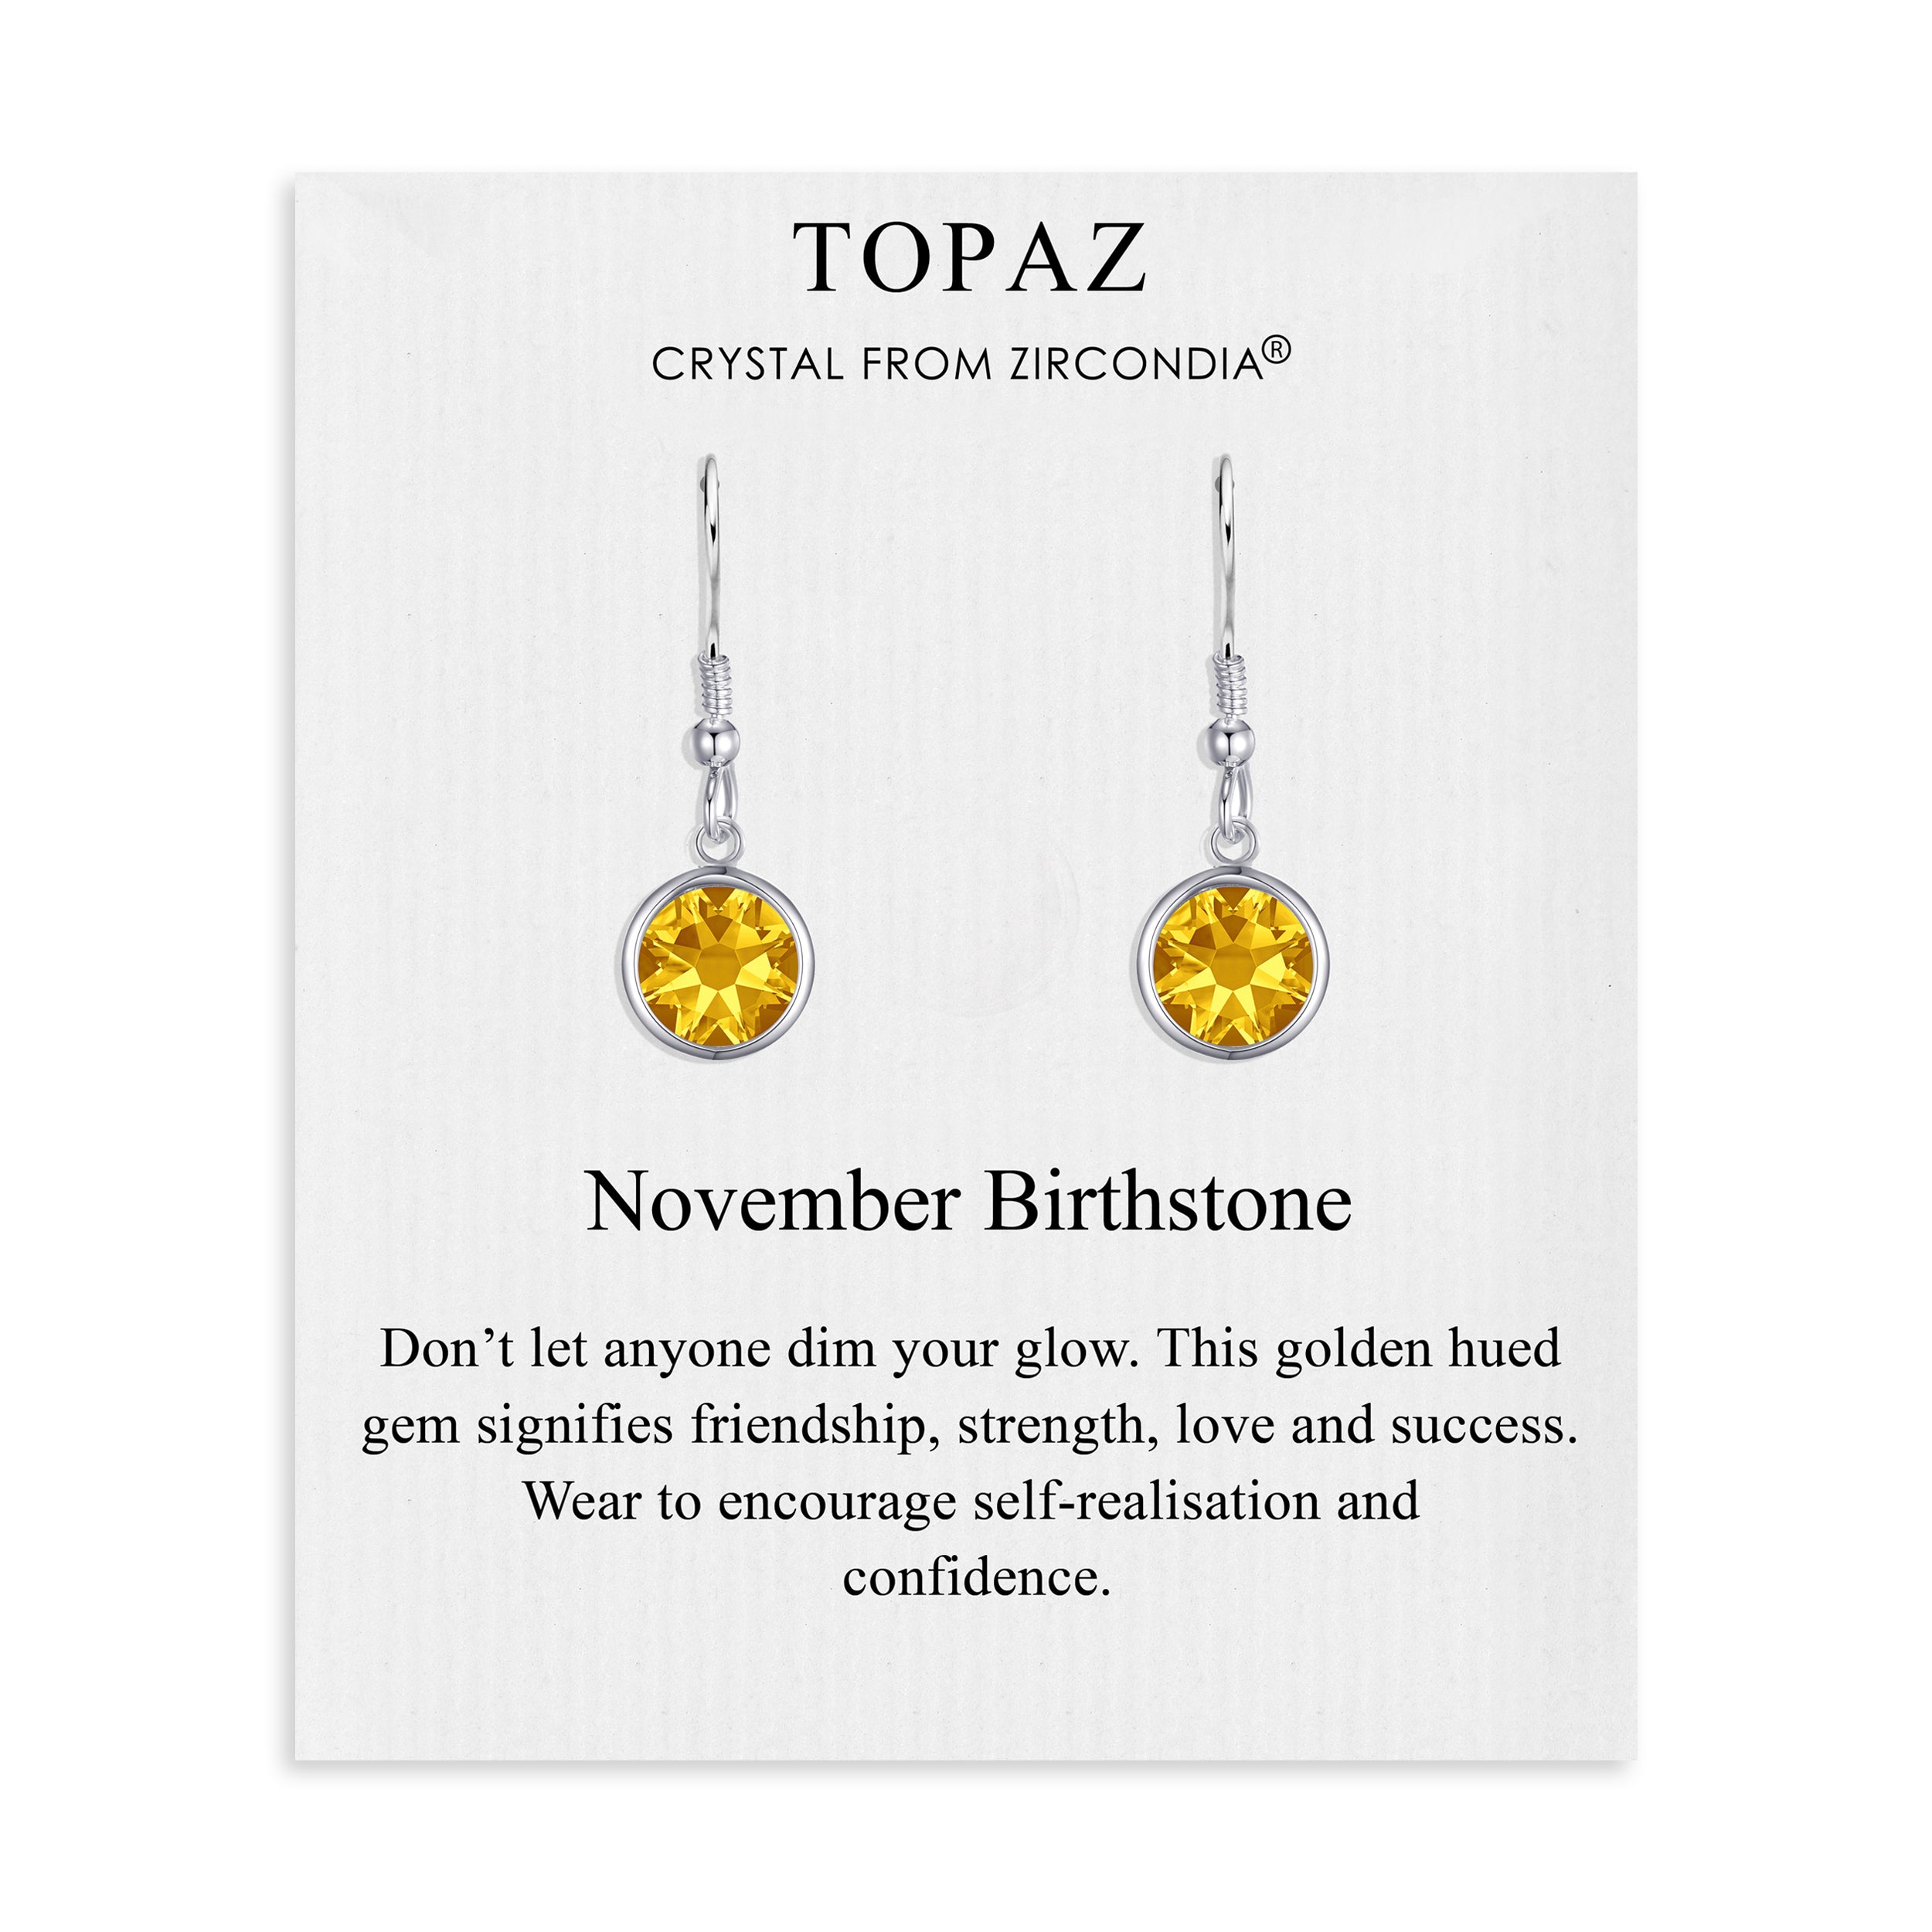 November Birthstone Drop Earrings Created with Topaz Zircondia® Crystals